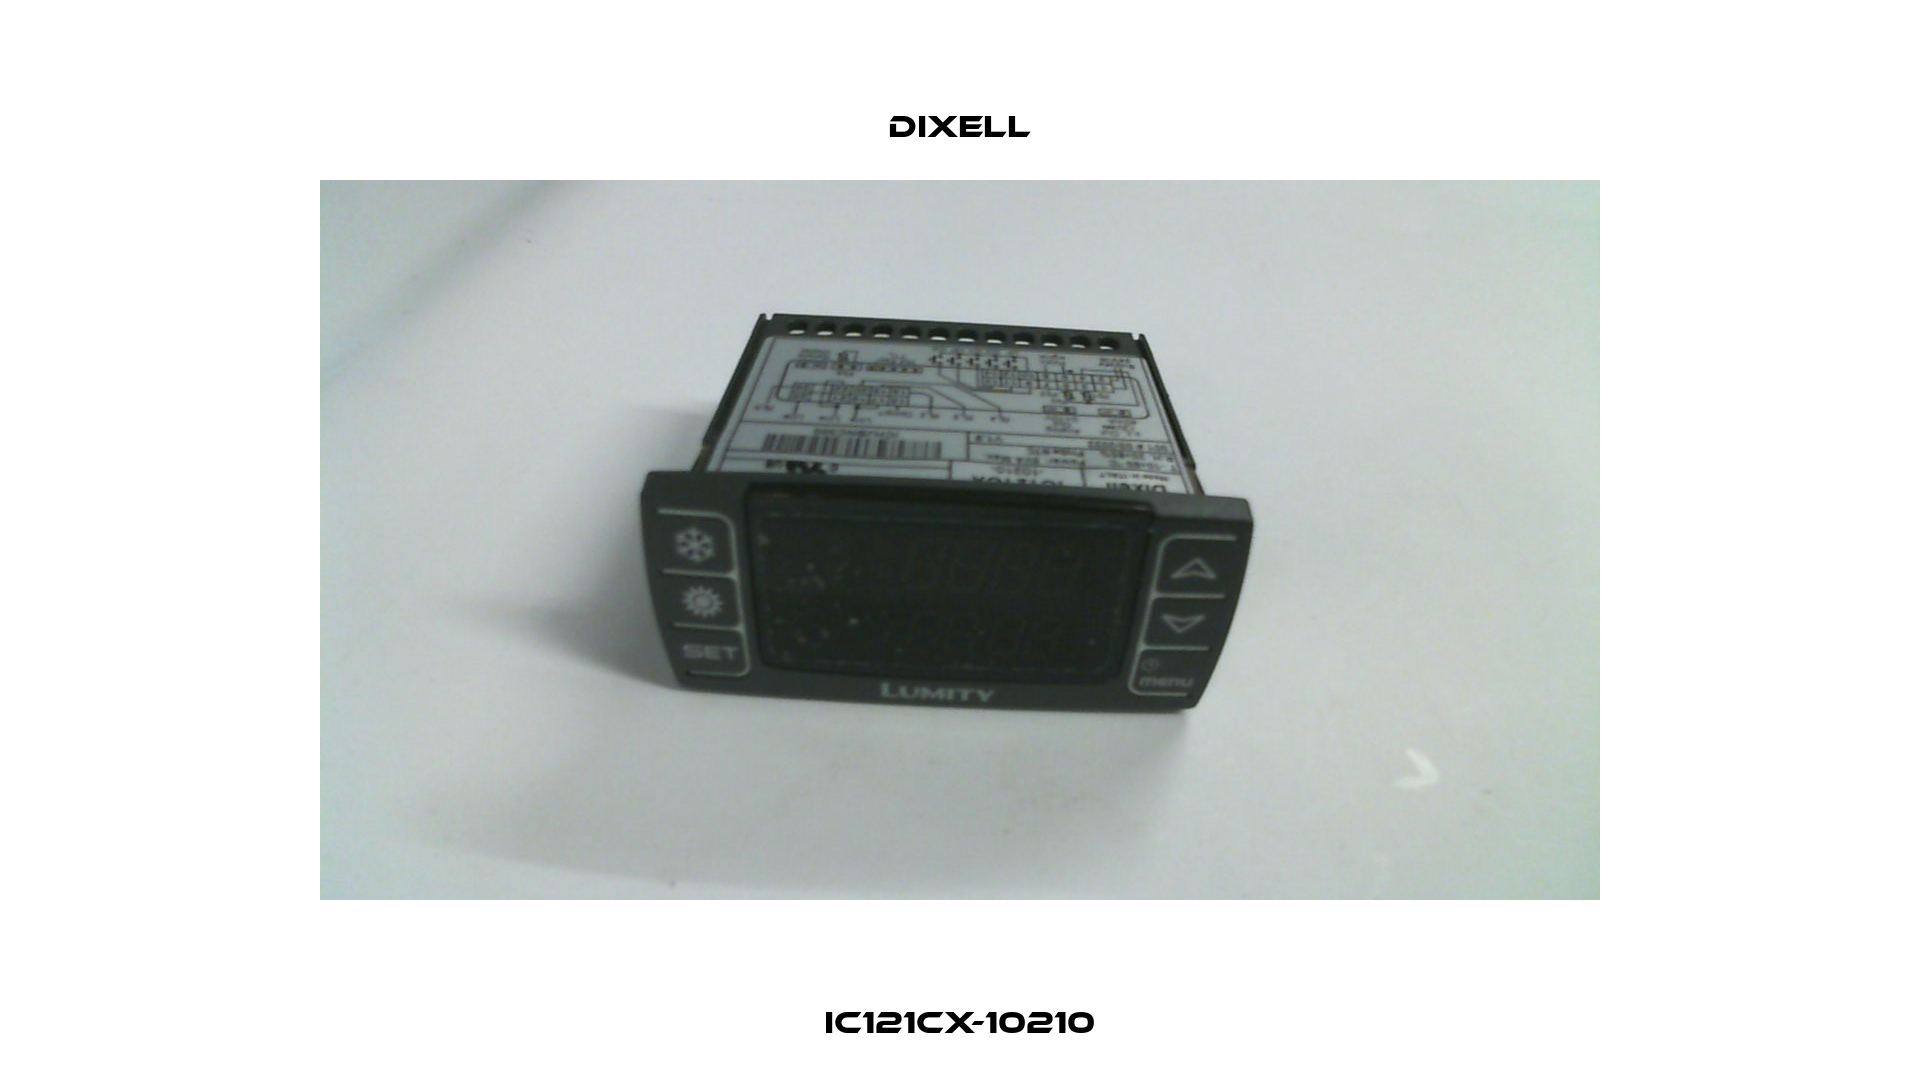 IC121CX-10210 Dixell